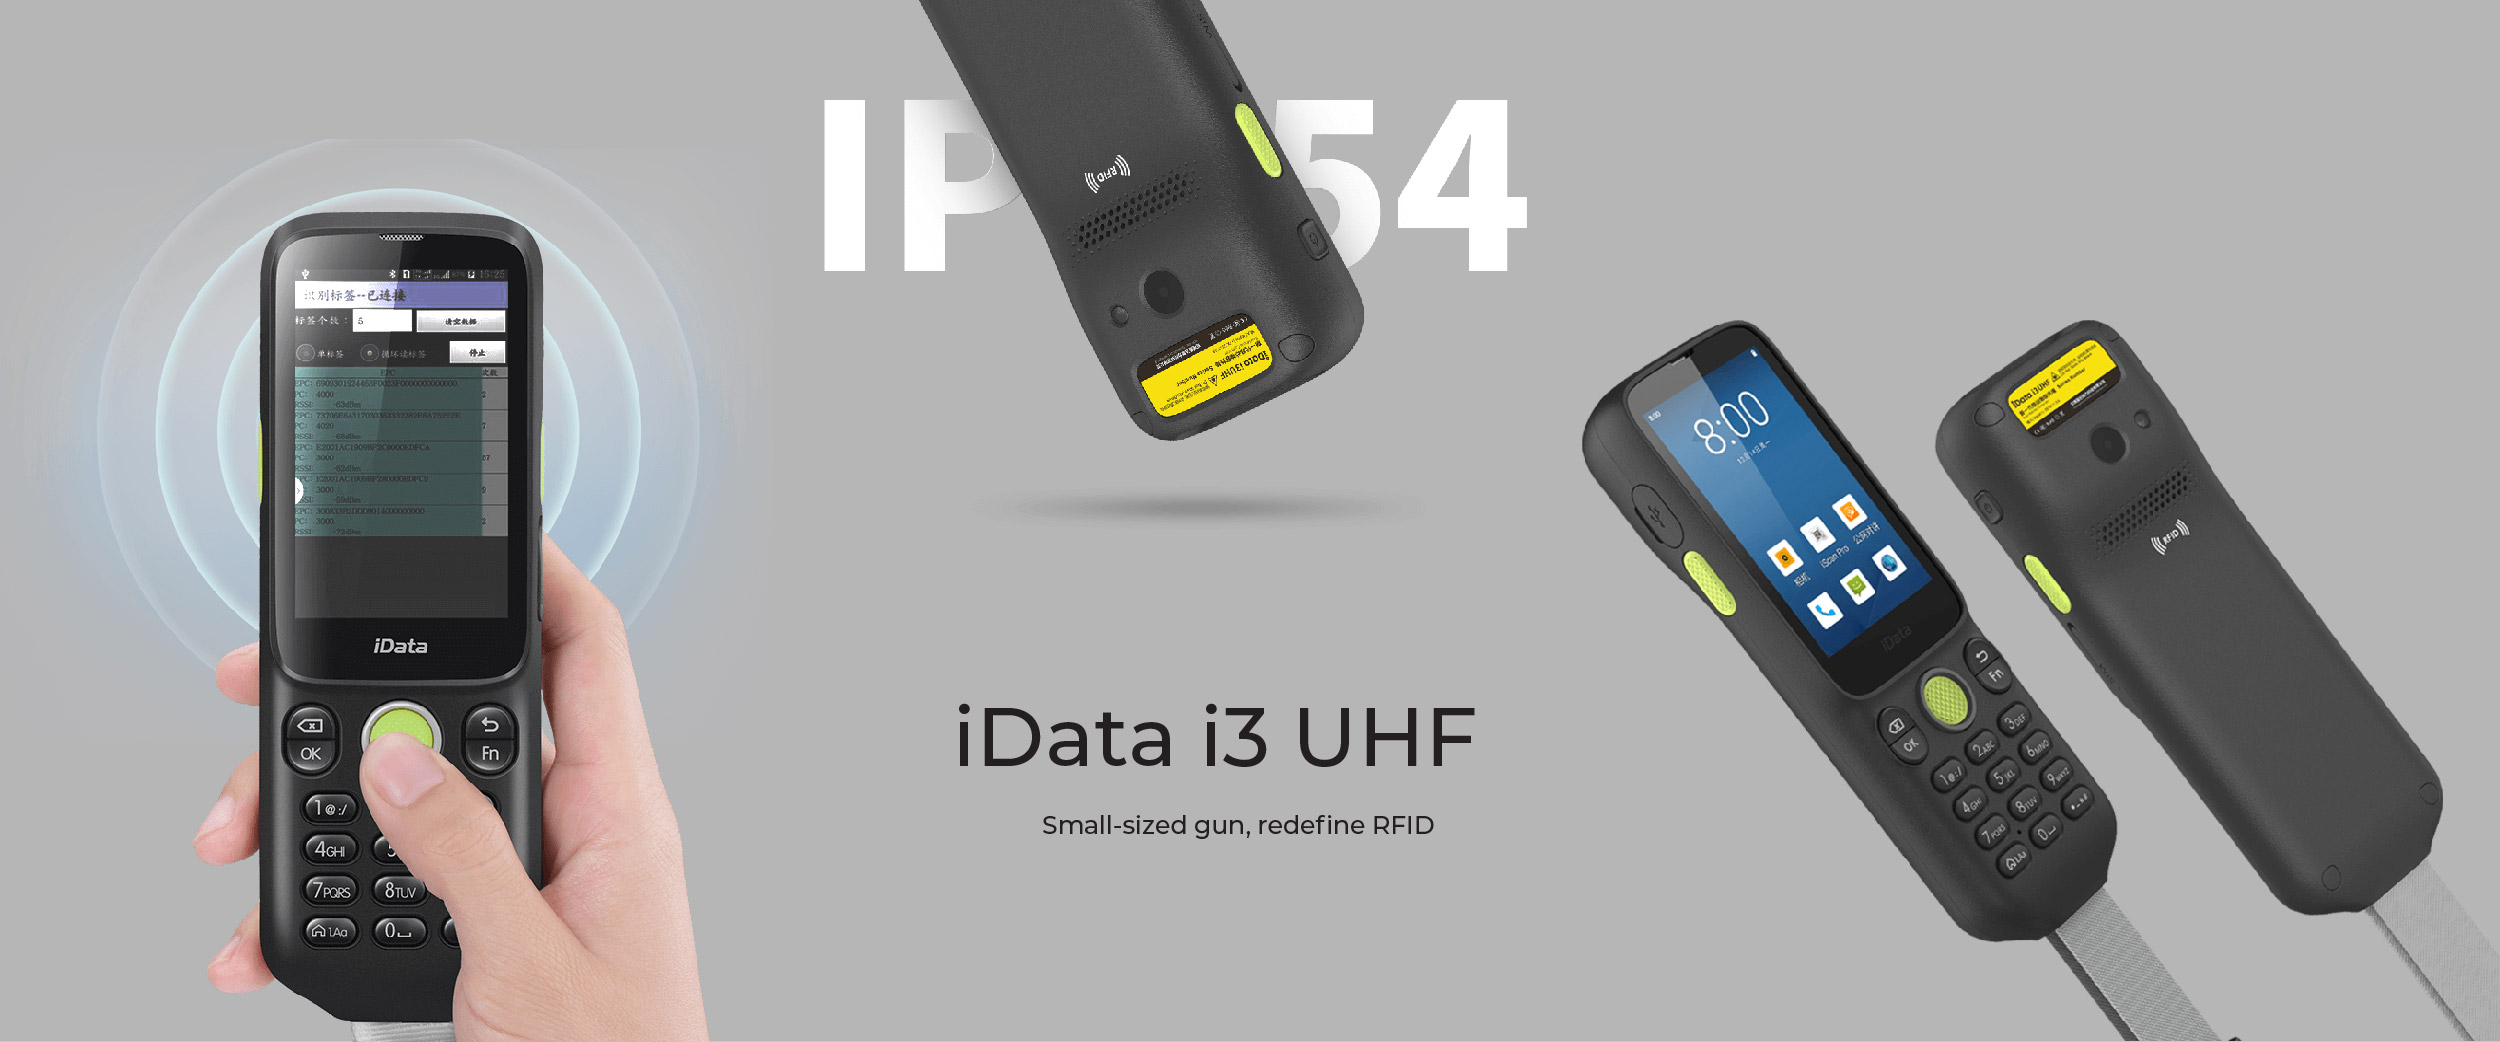 iData i3 UHF Mobile Computer Portable RFID terminal